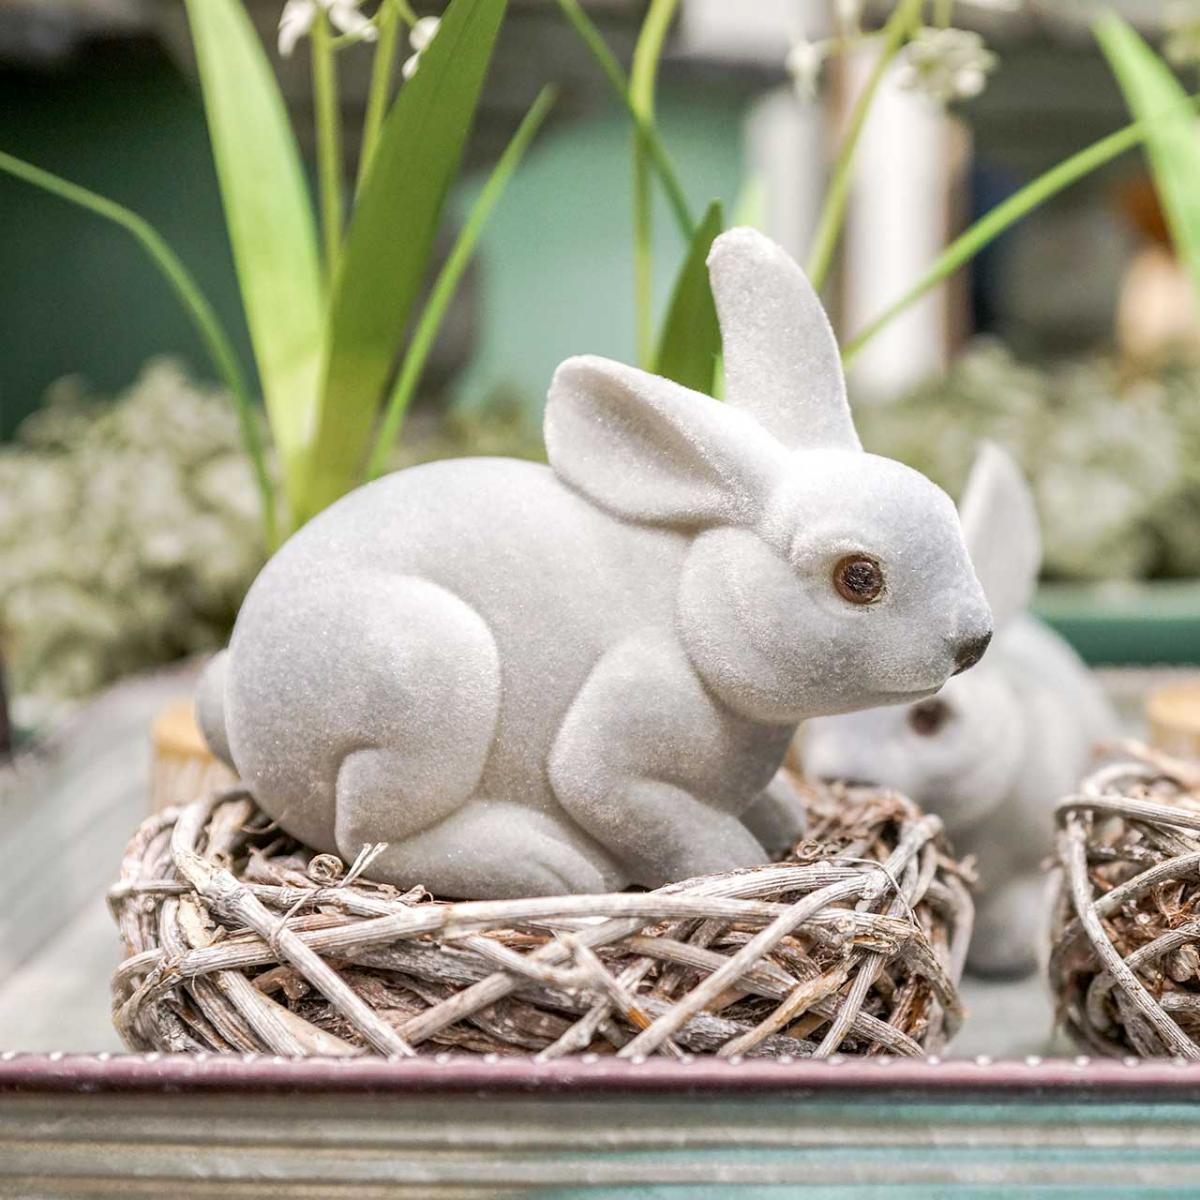 Deco figure rabbit gray, spring decoration, Easter bunny sitting flocked 3pcs